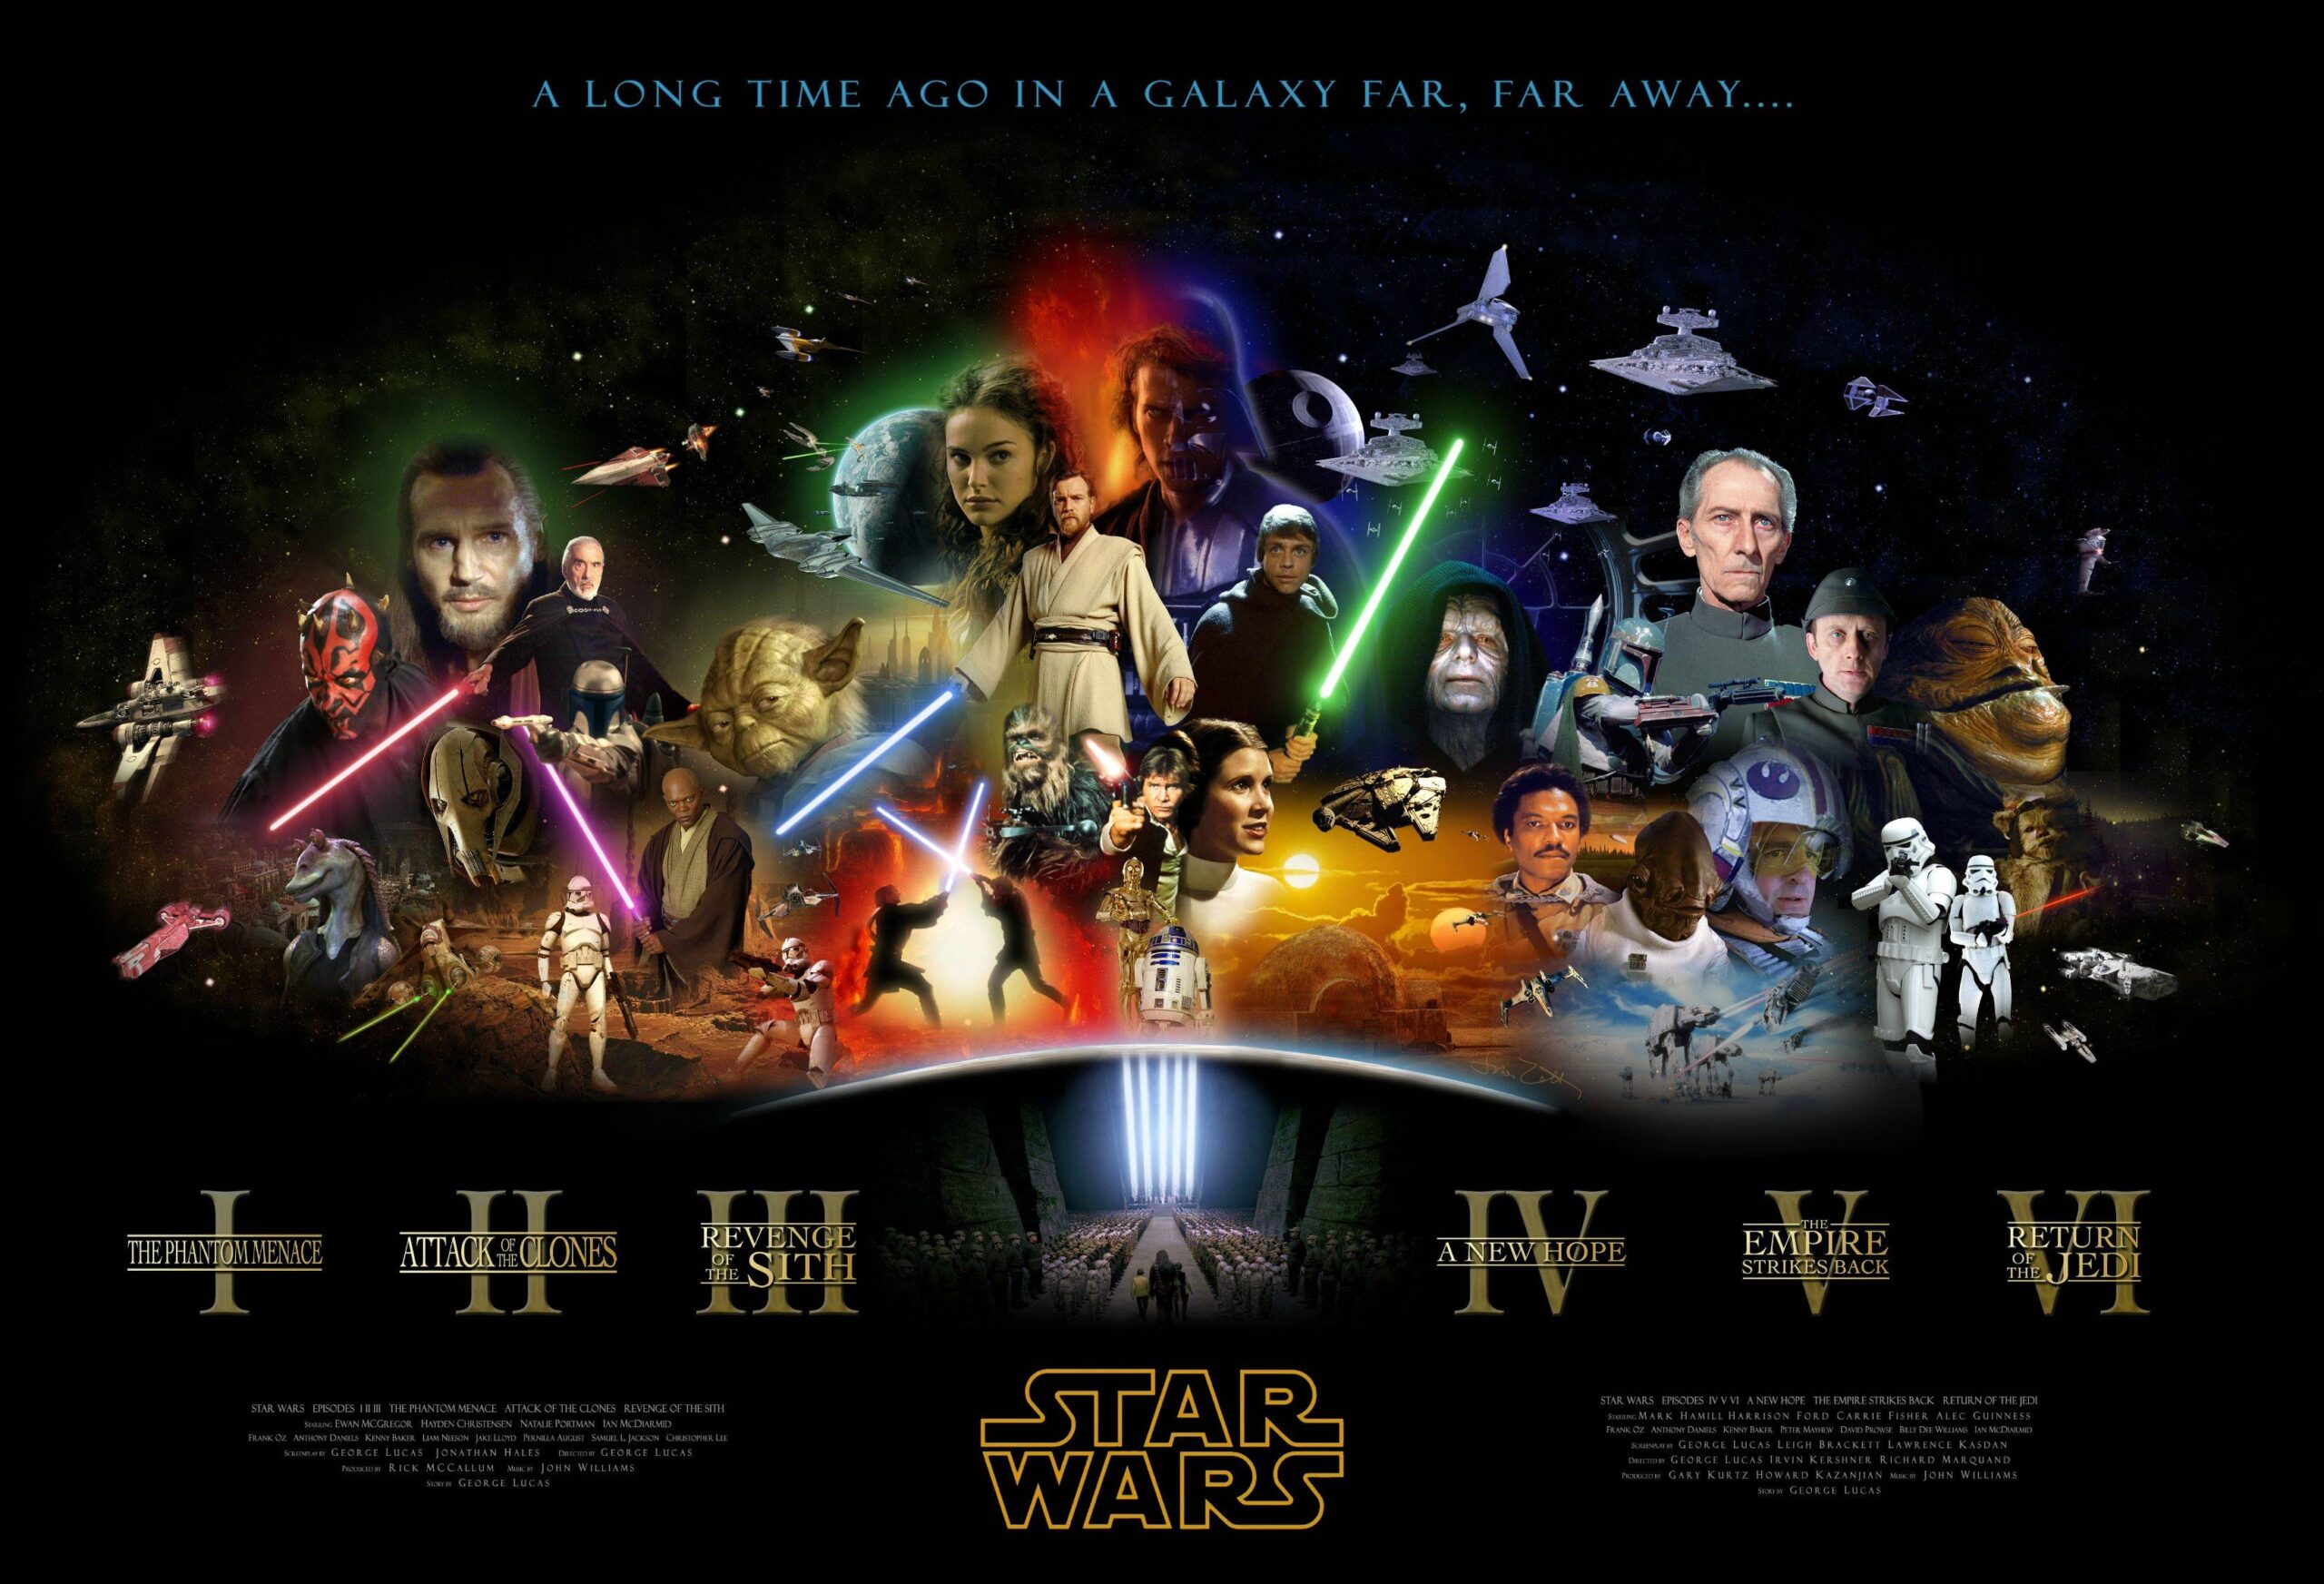 Qual a melhor ordem para assistir Star Wars? - NerdBunker